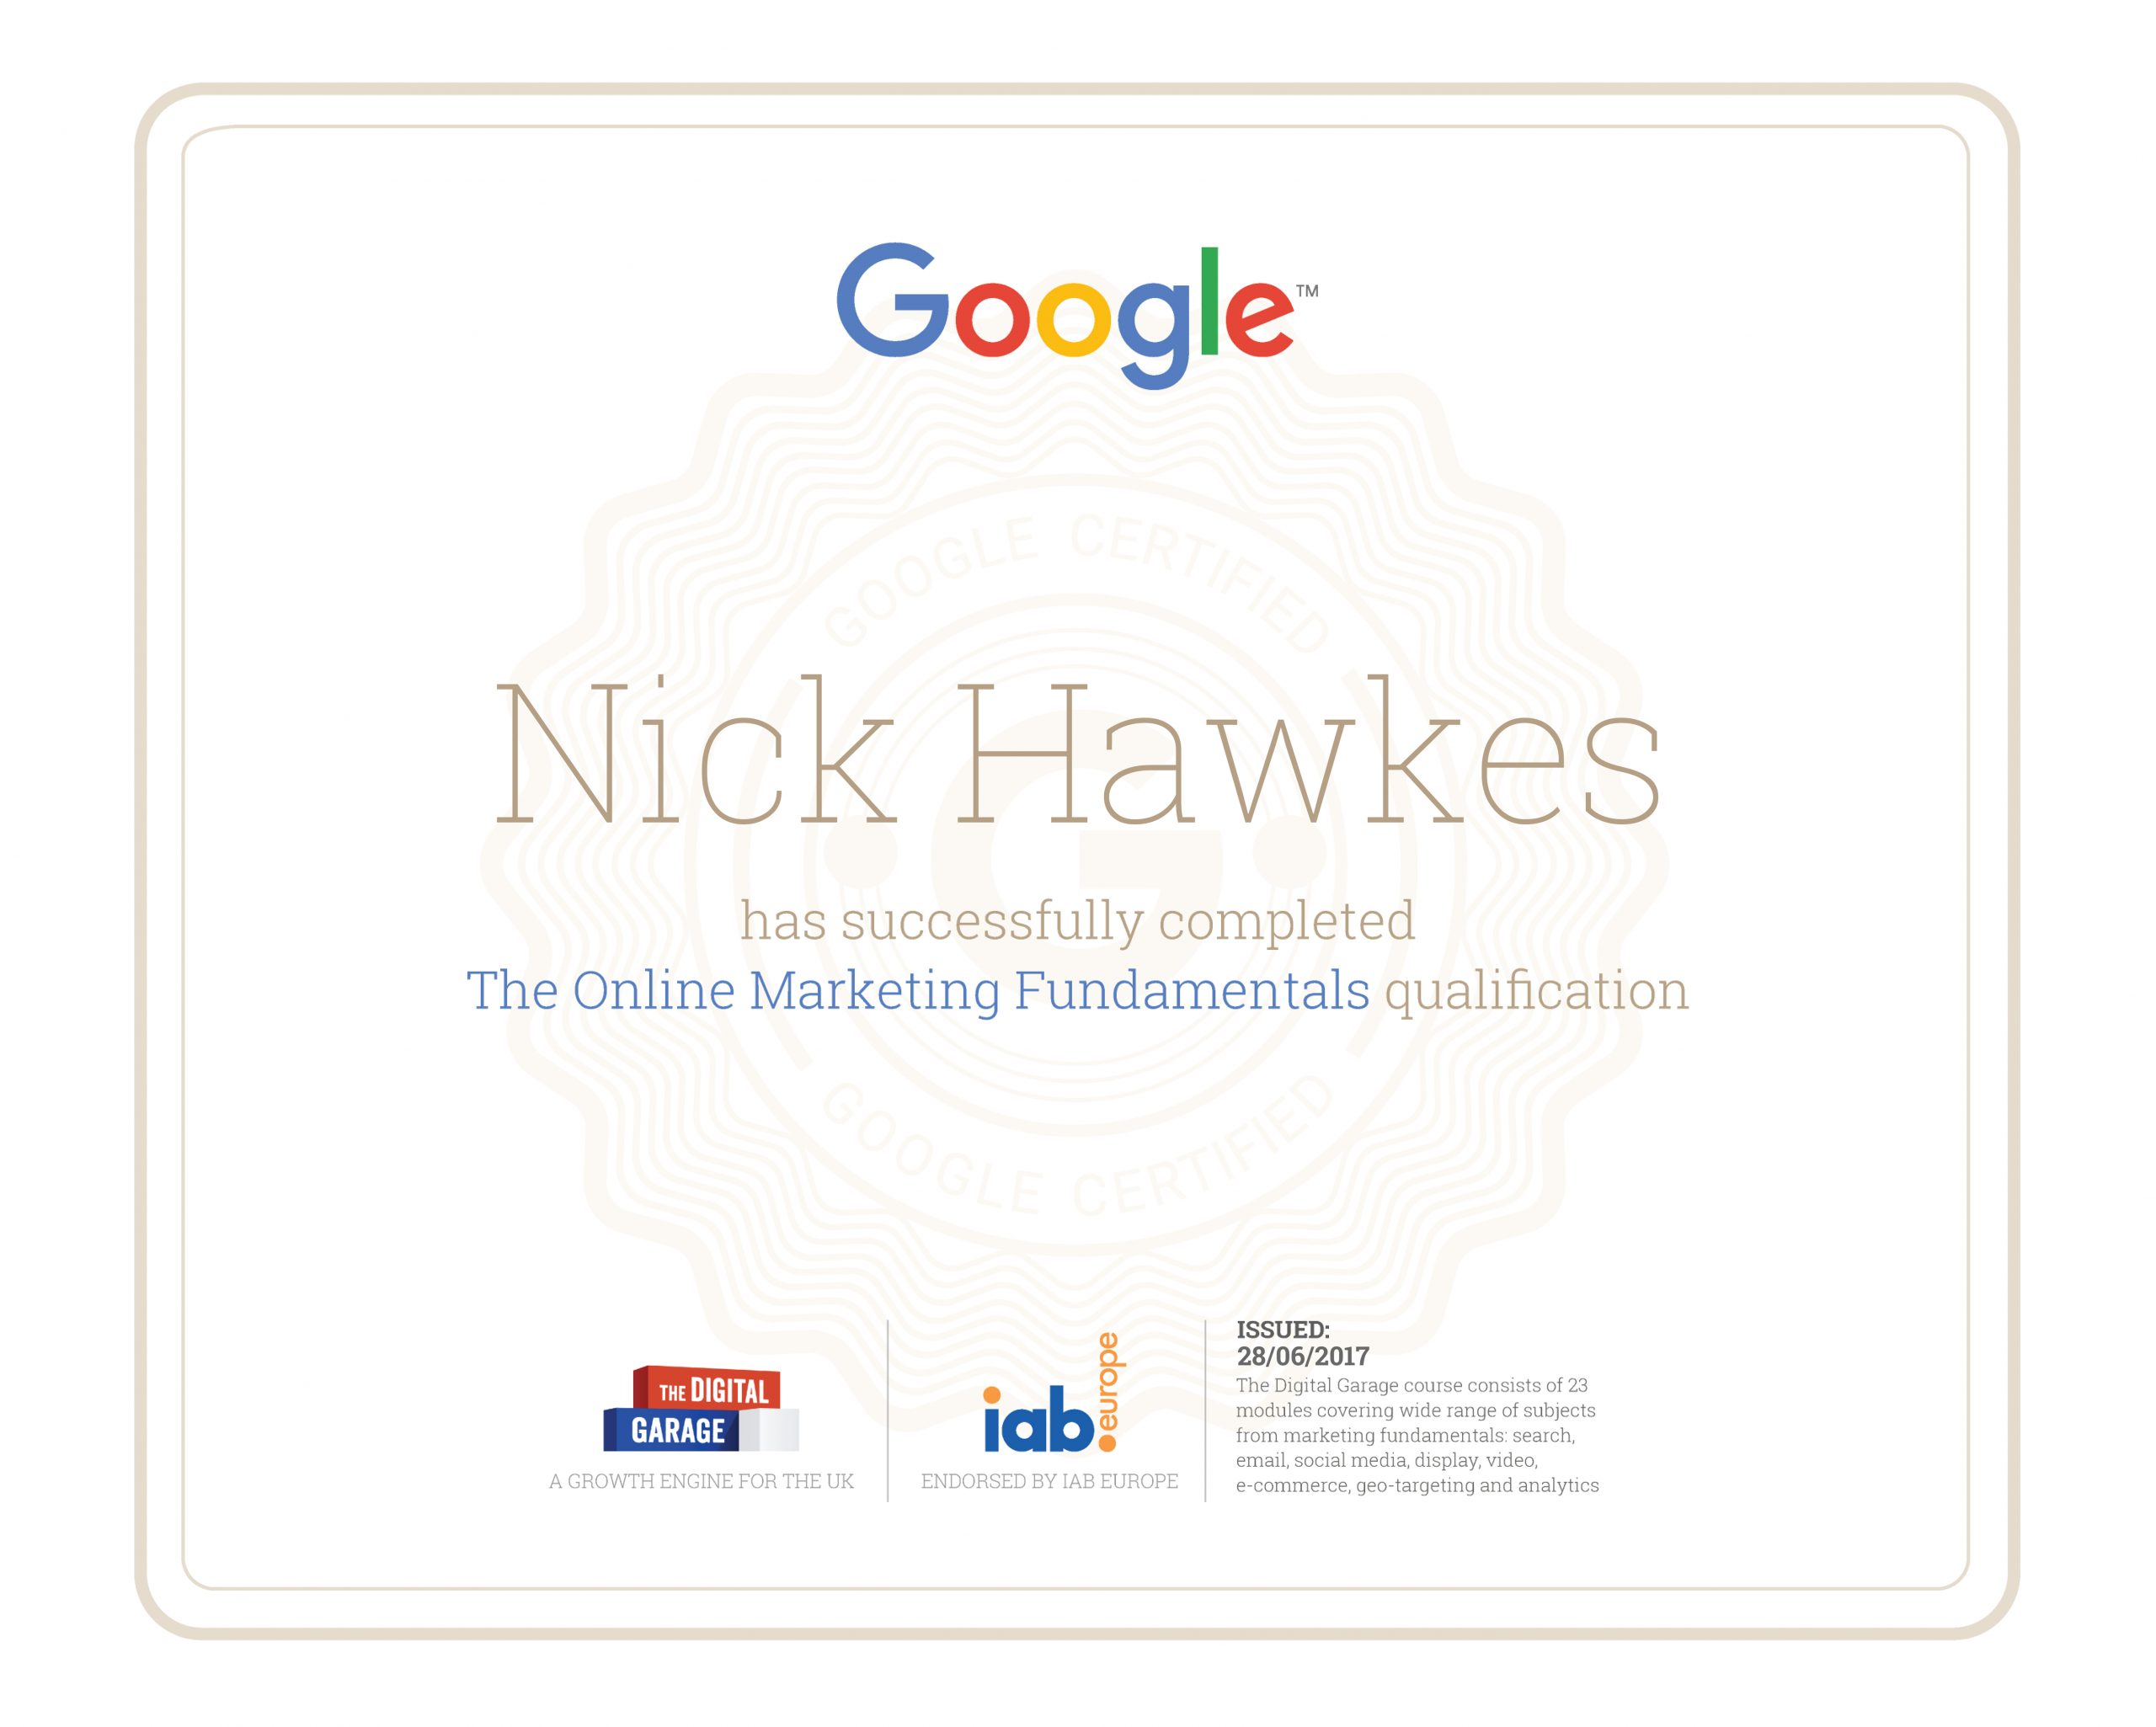 The Online Marketing Fundamentals - Google qualification certificate